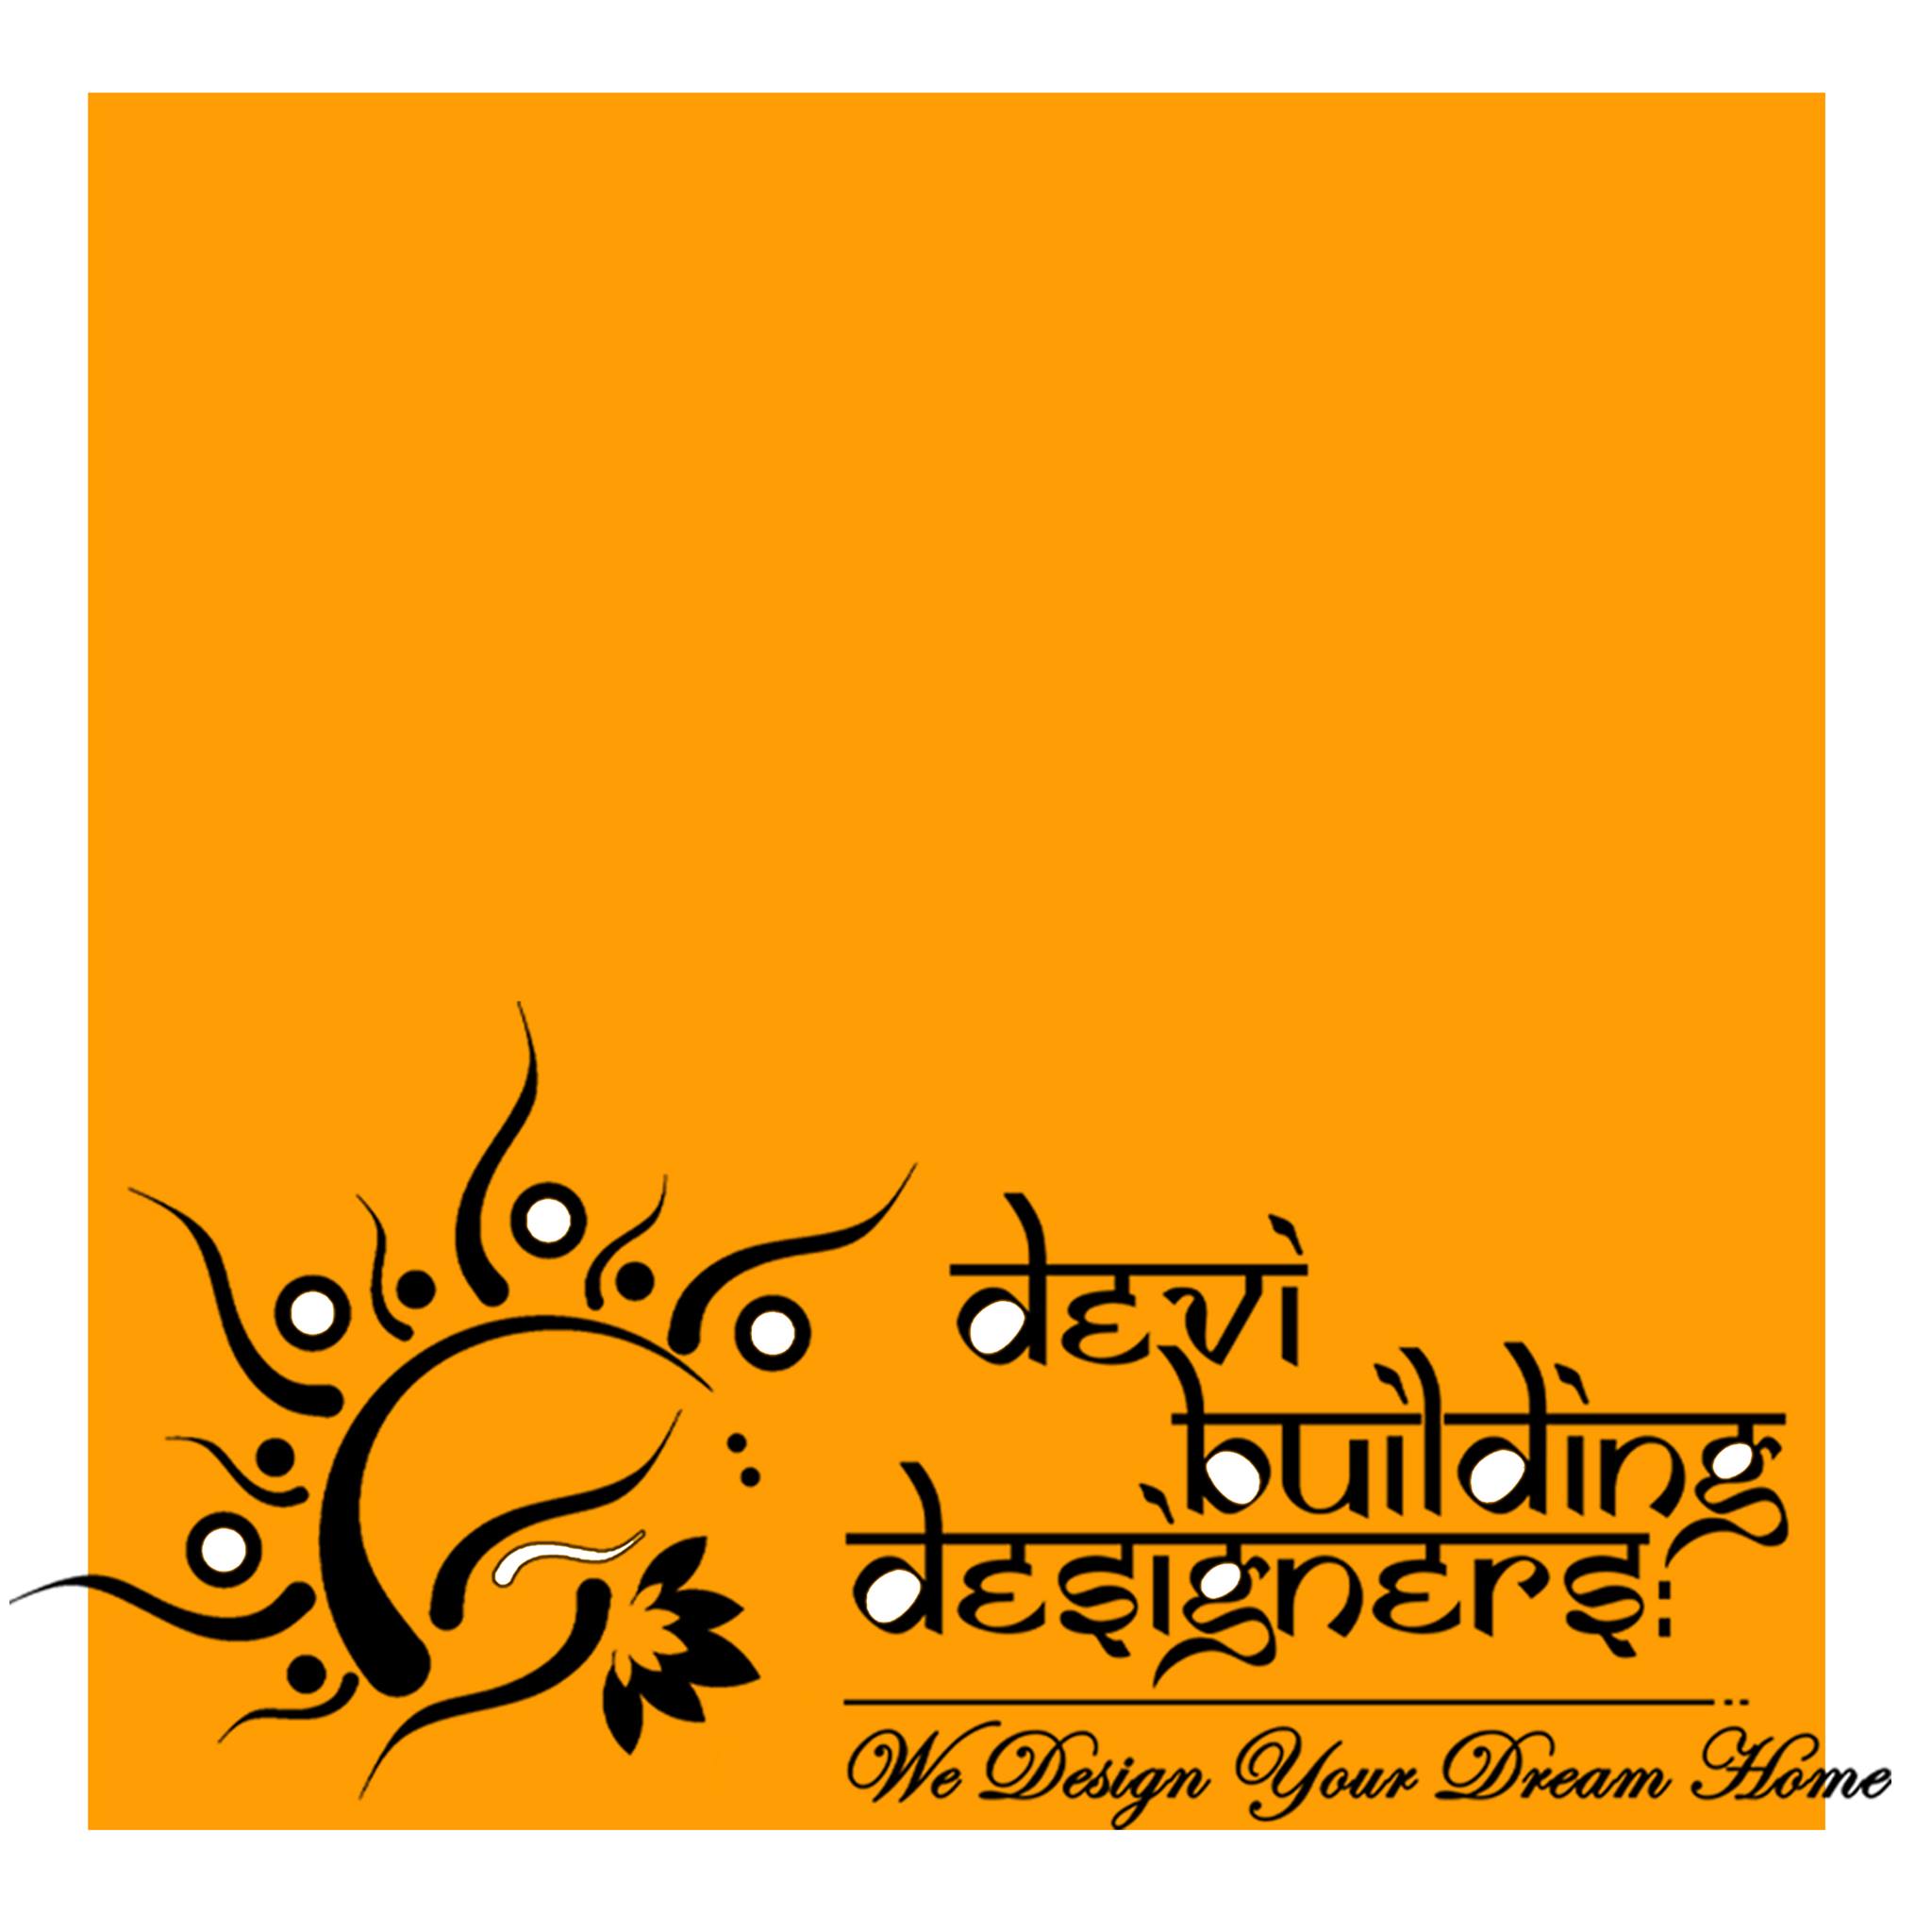 Devi Building Designers - Logo